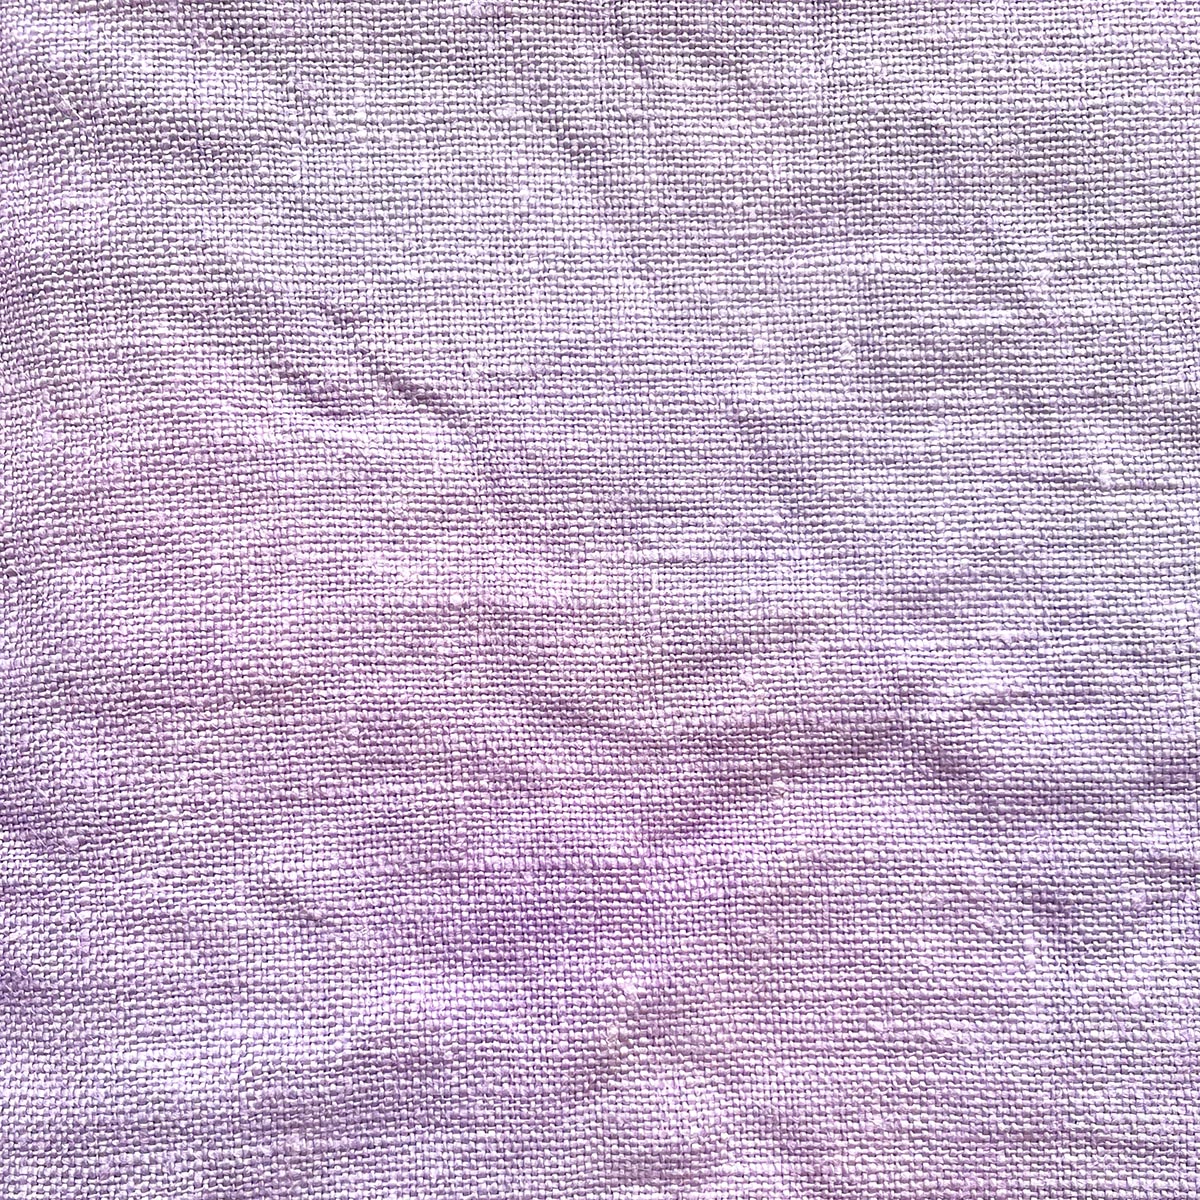 www.colourstreams.com.au Colour Streams Linen 36 Count Antique Rose DL 17 Jacaranda Mauves Purples Embroidery Cross Stitch Textile Arts FIbre Embroidery Slow Stitching Counted Meditative Australia